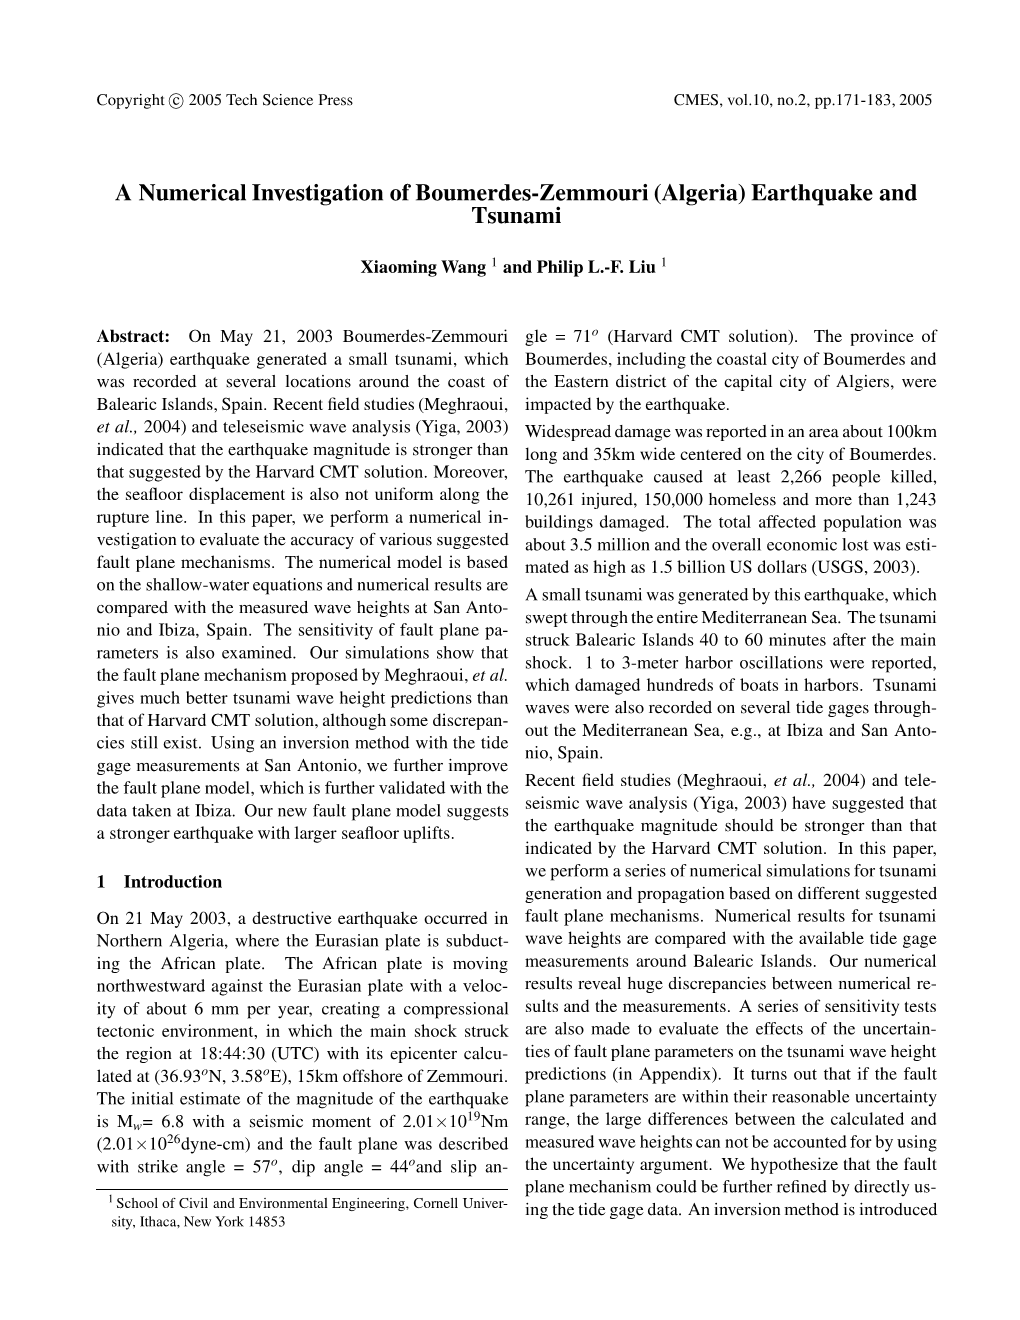 A Numerical Investigation of Boumerdes-Zemmouri (Algeria) Earthquake and Tsunami